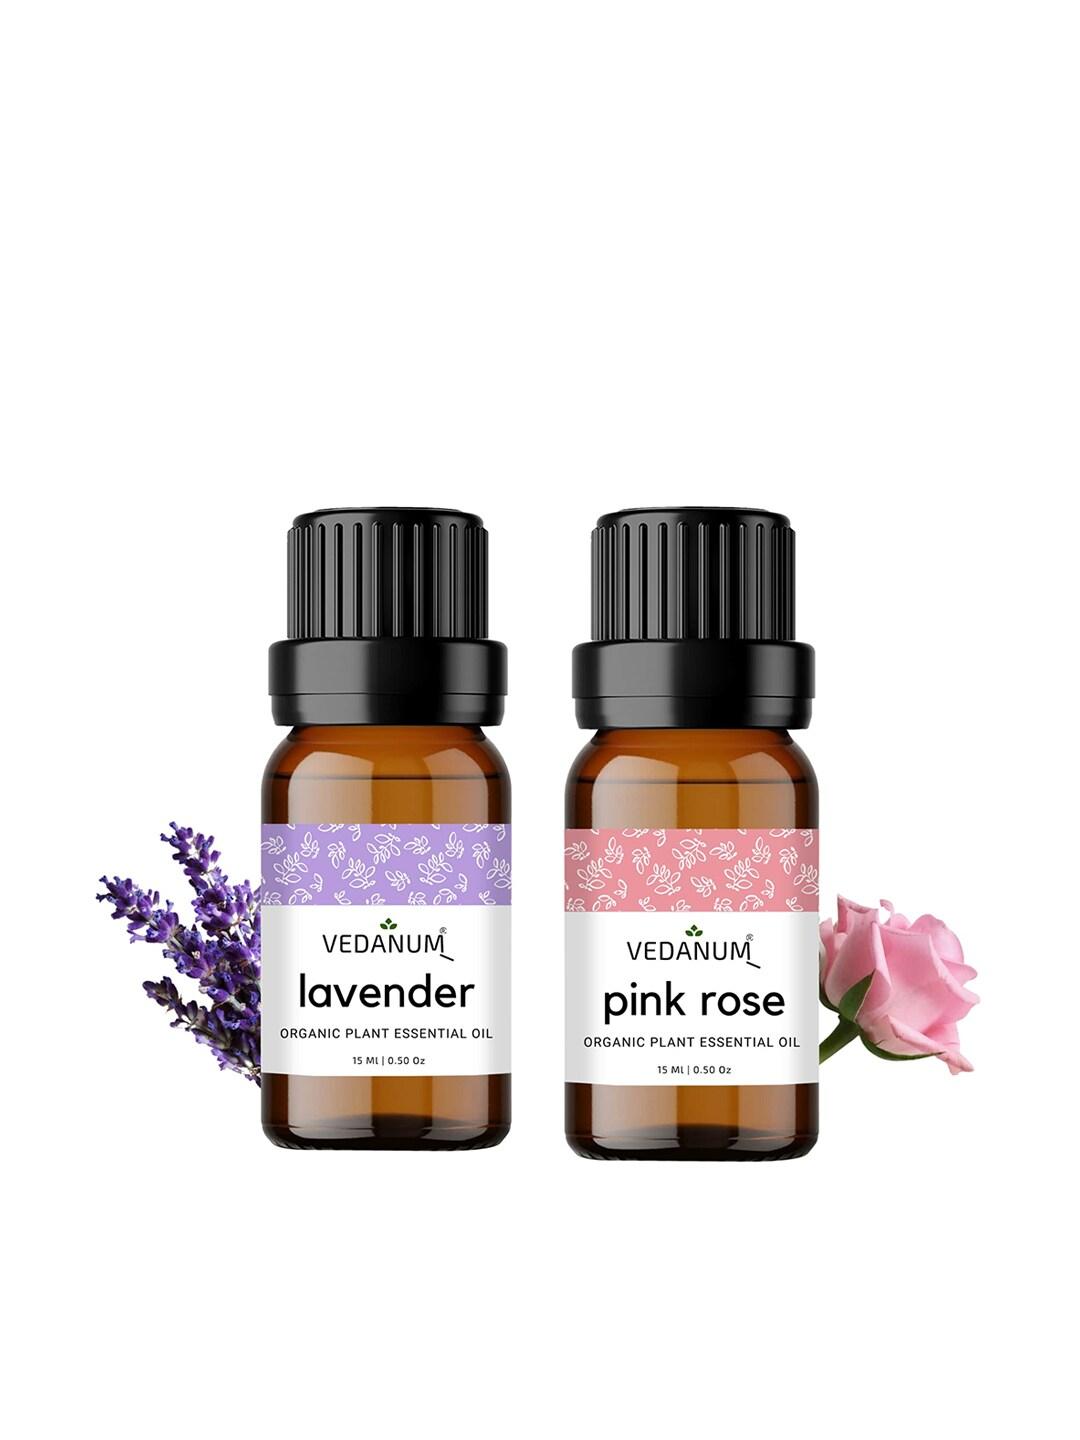 VEDANUM Set of 2 Organic Plant Essential Oils 15ml each - Lavender & Pink Rose